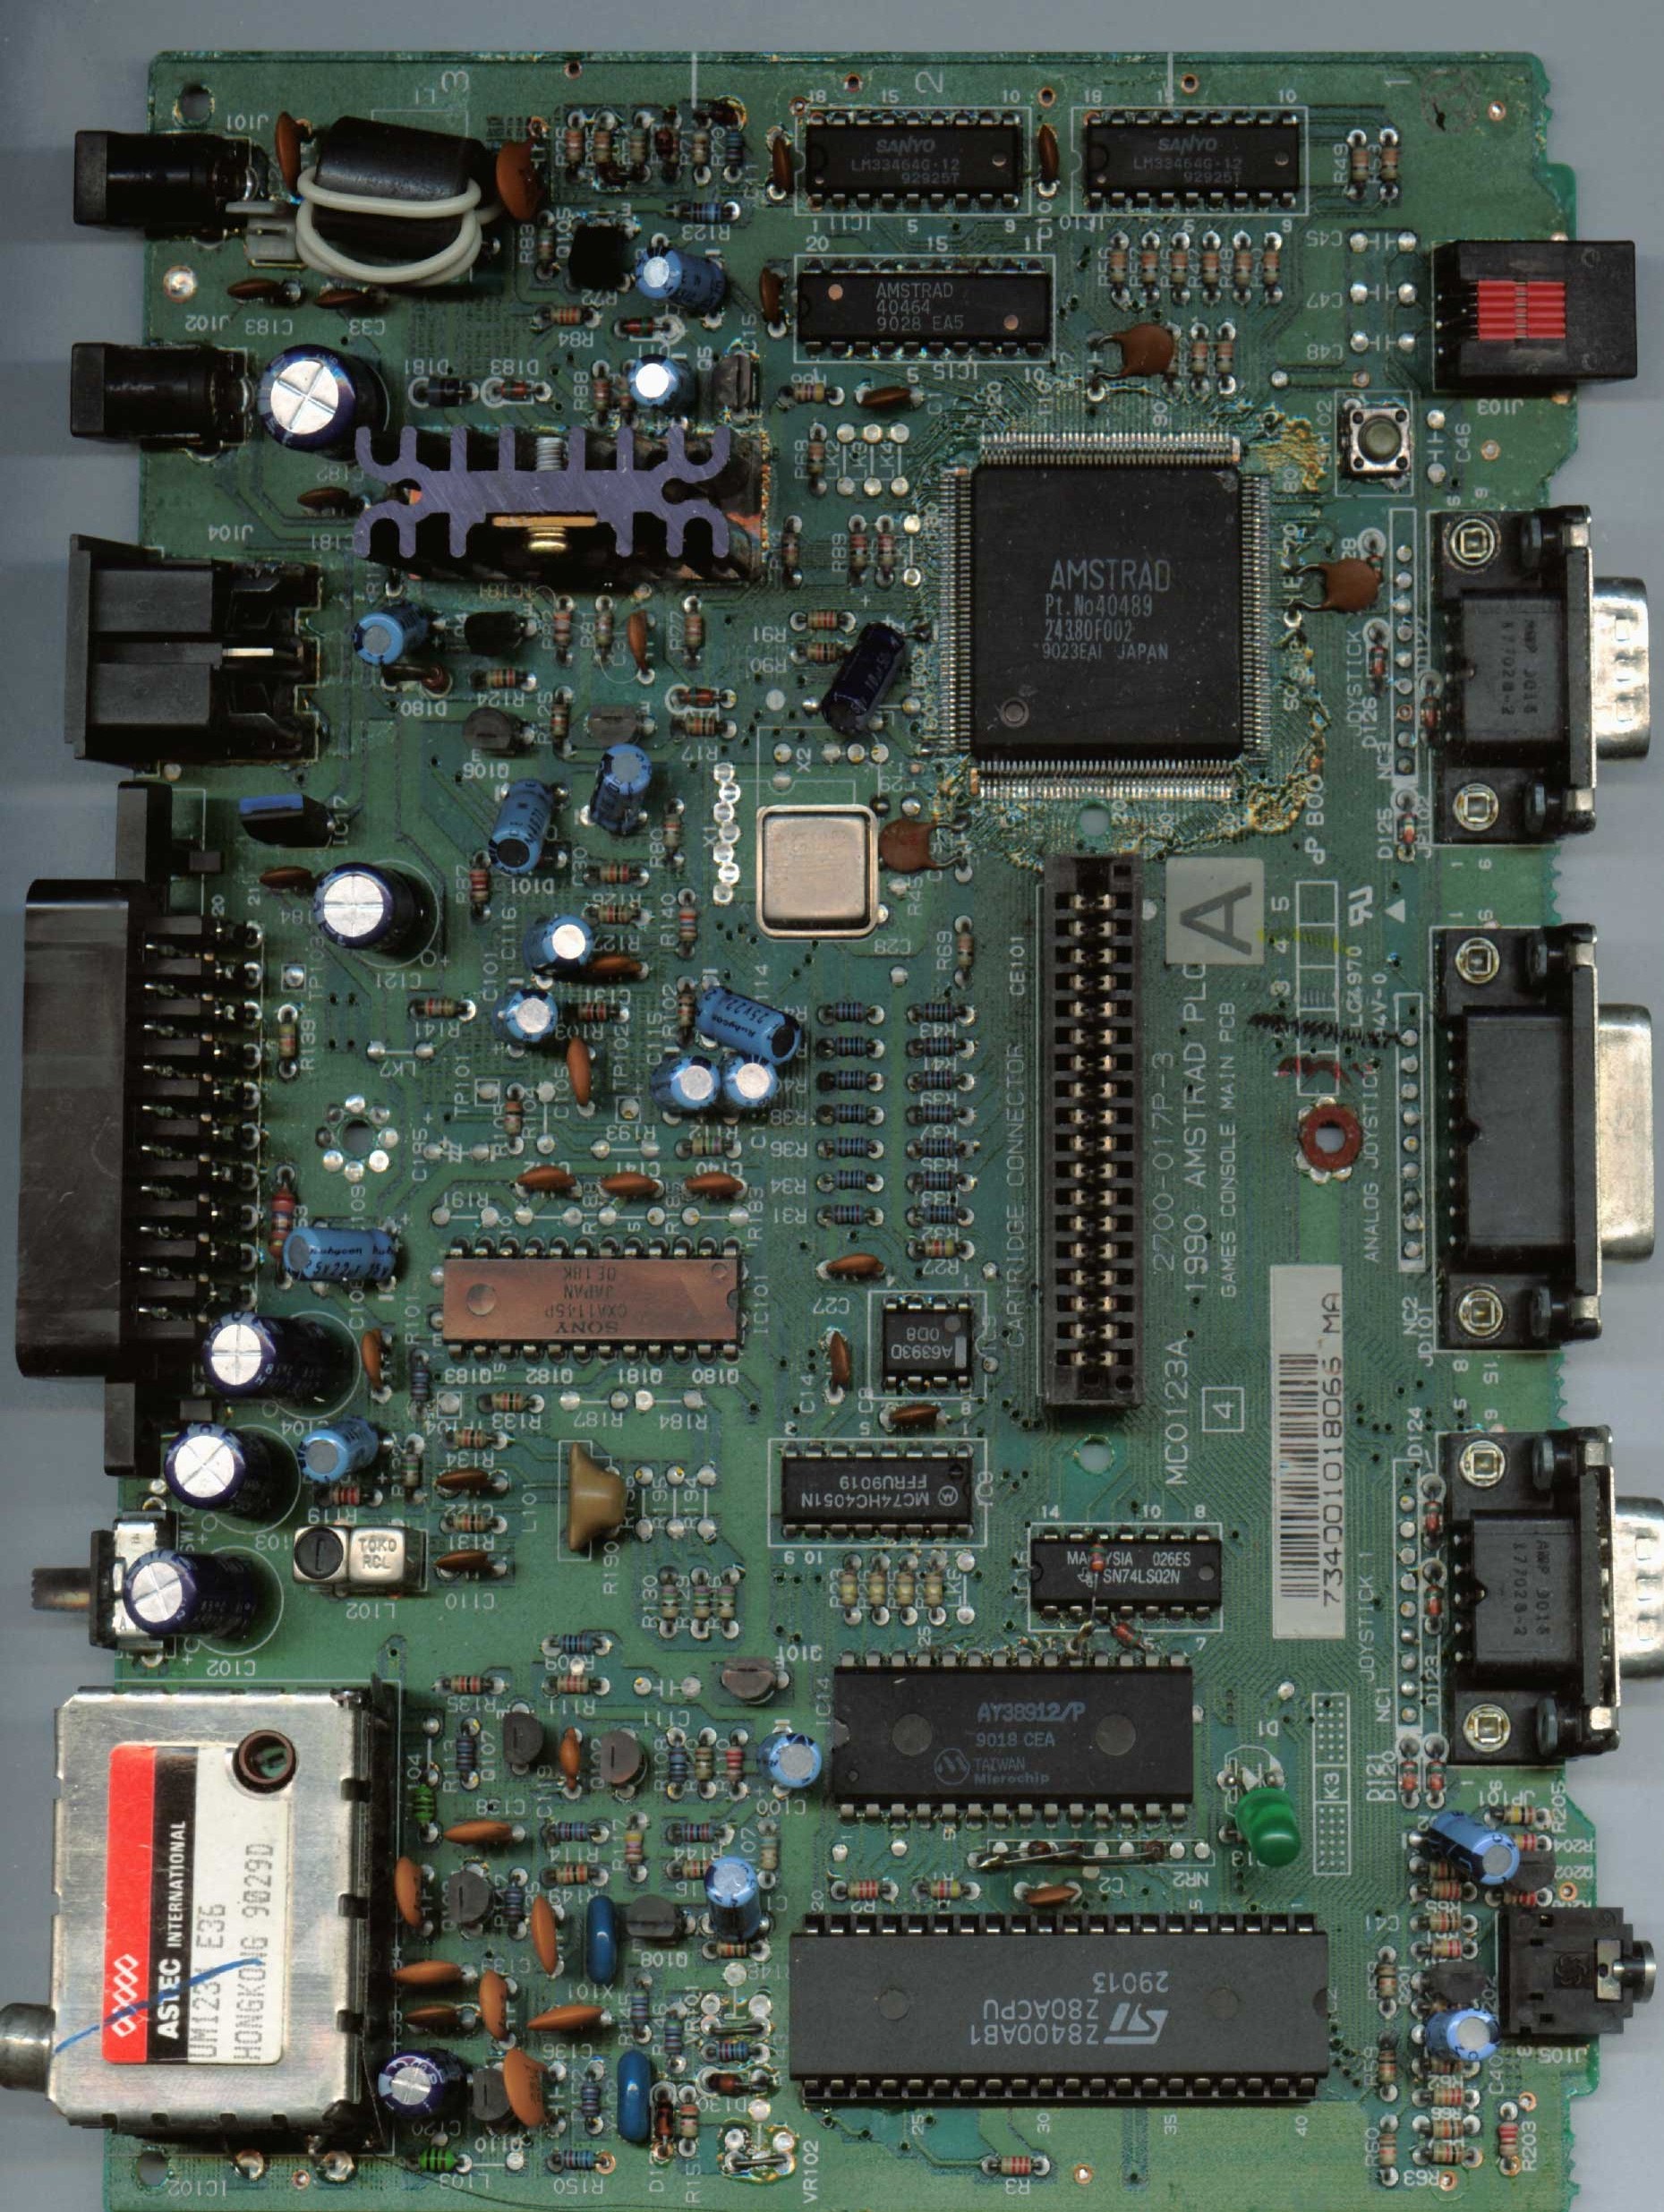 Amstrad Gx4000 HD wallpapers, Desktop wallpaper - most viewed